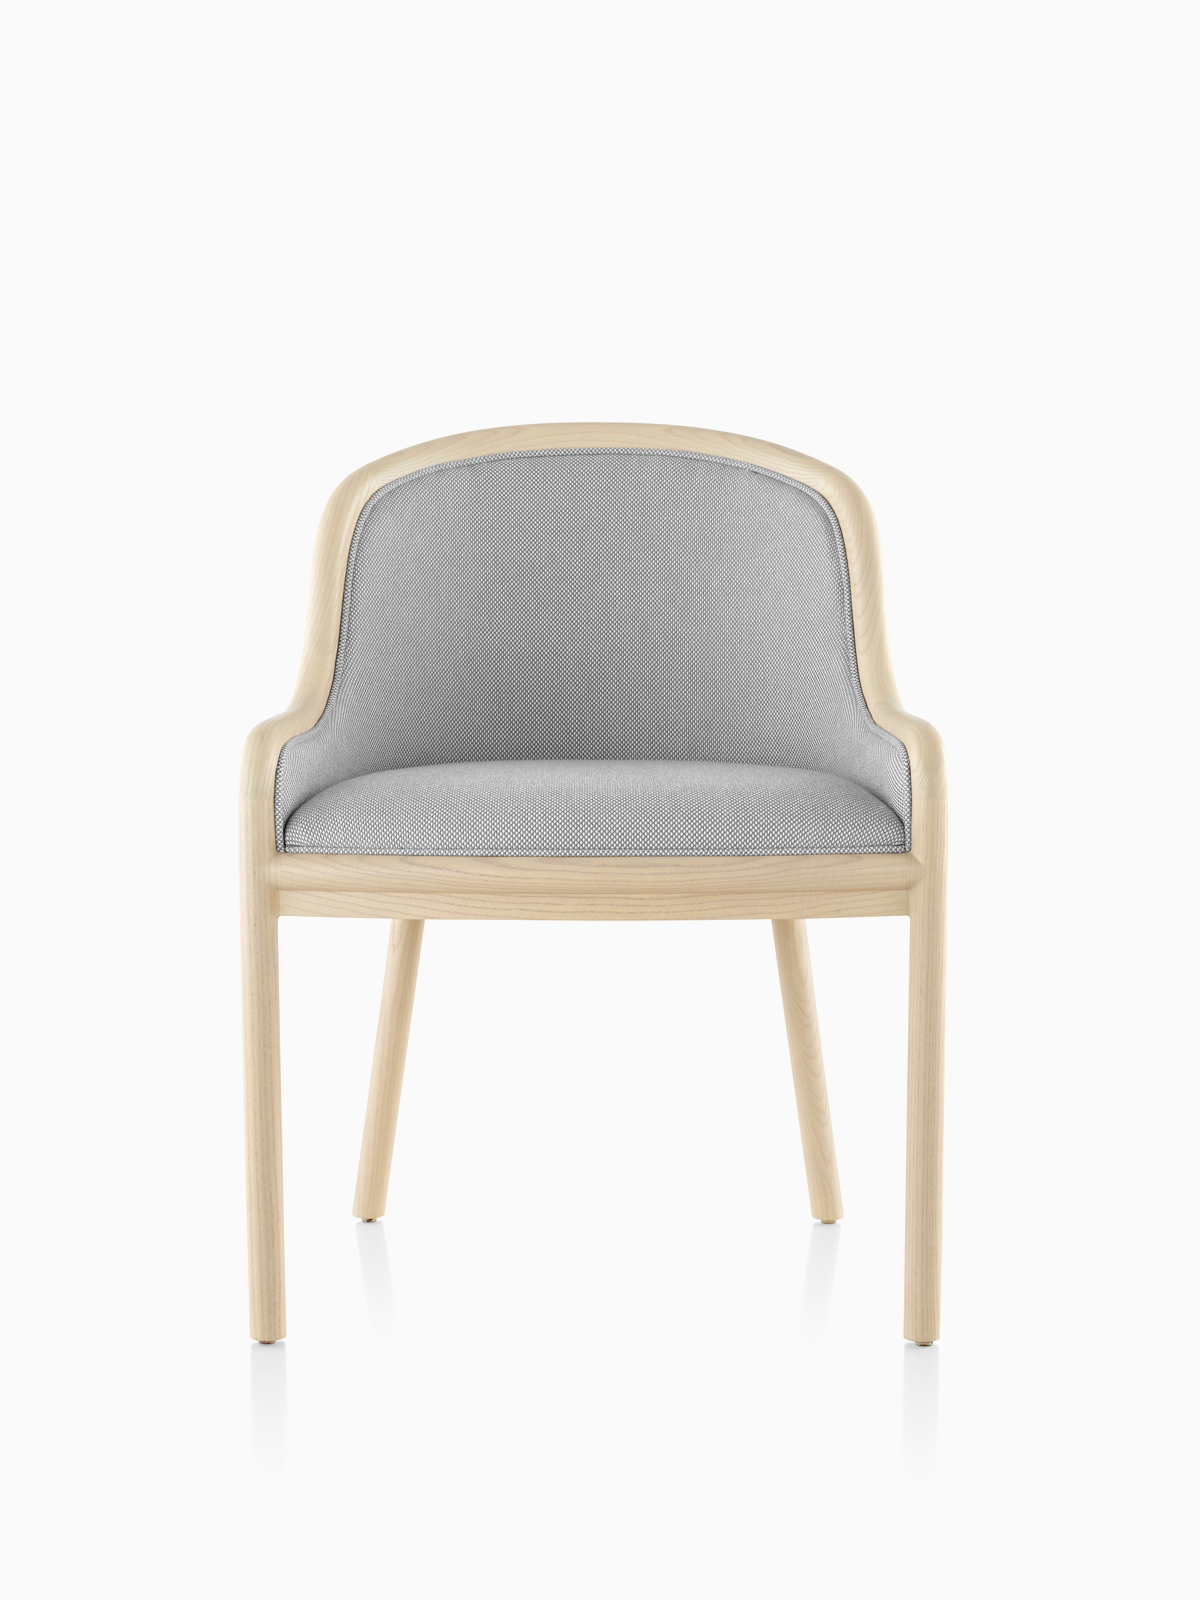 Landmark-stoel